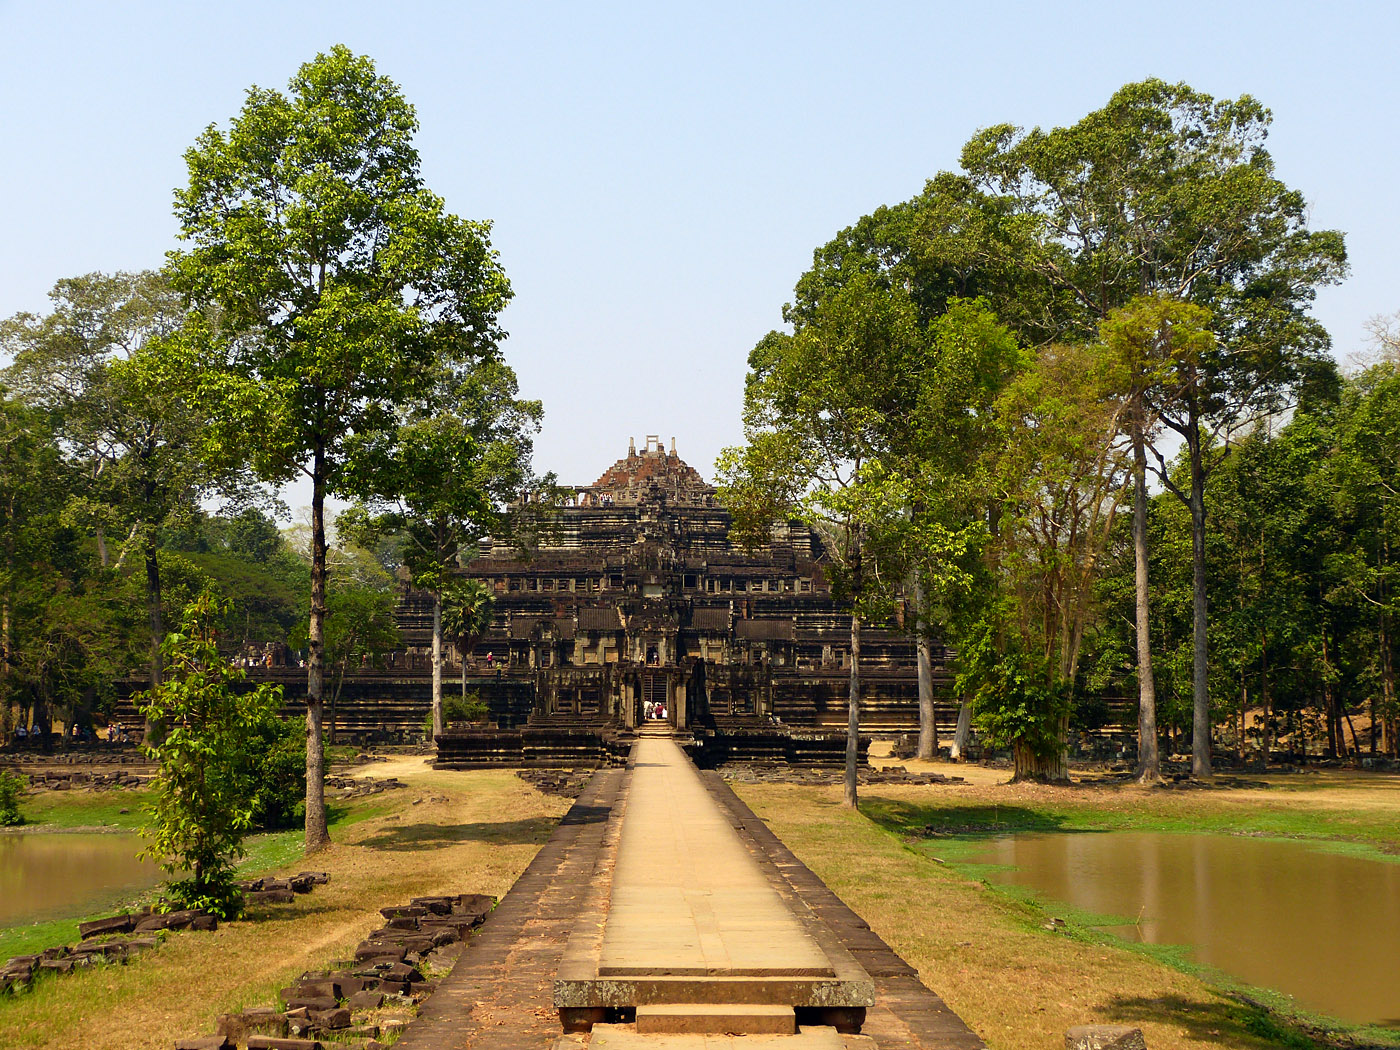 The Baphuon, Angkor Thom, Cambodia